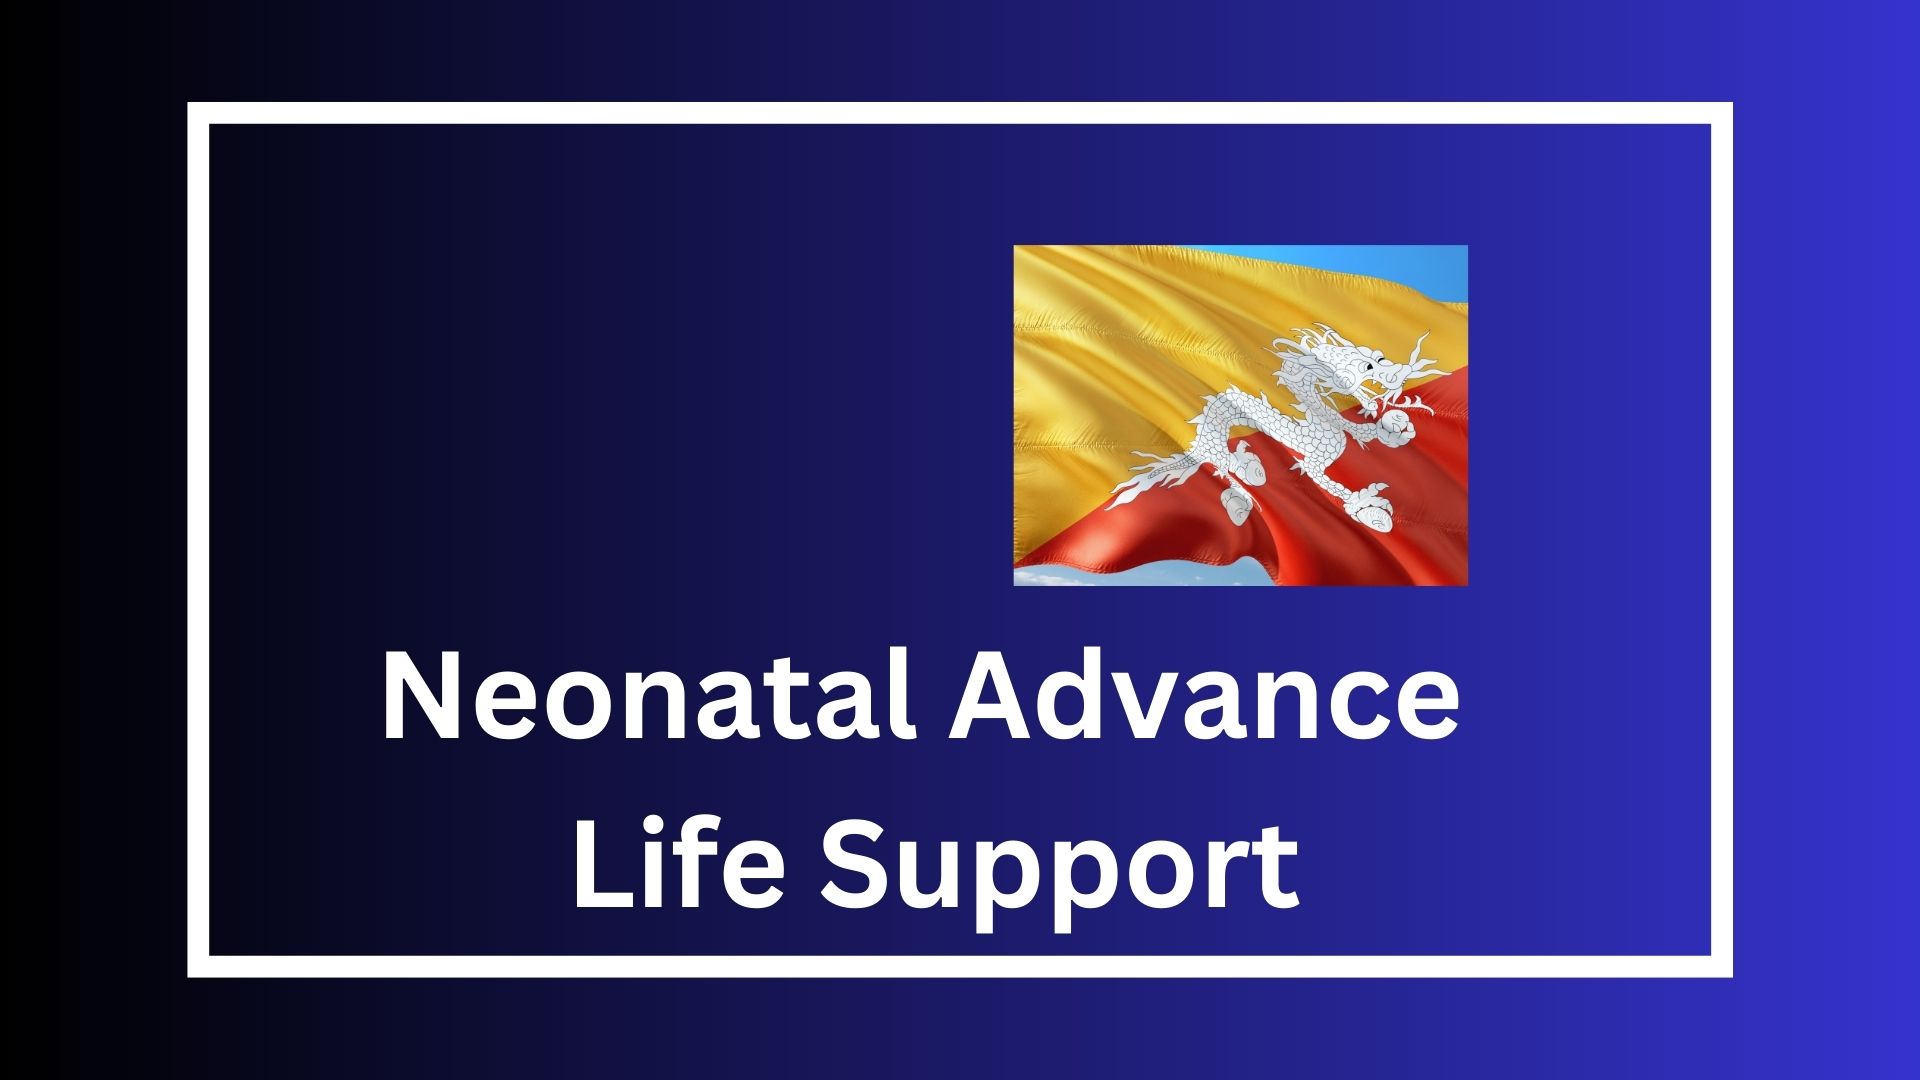 Neonatal Advance Life Support